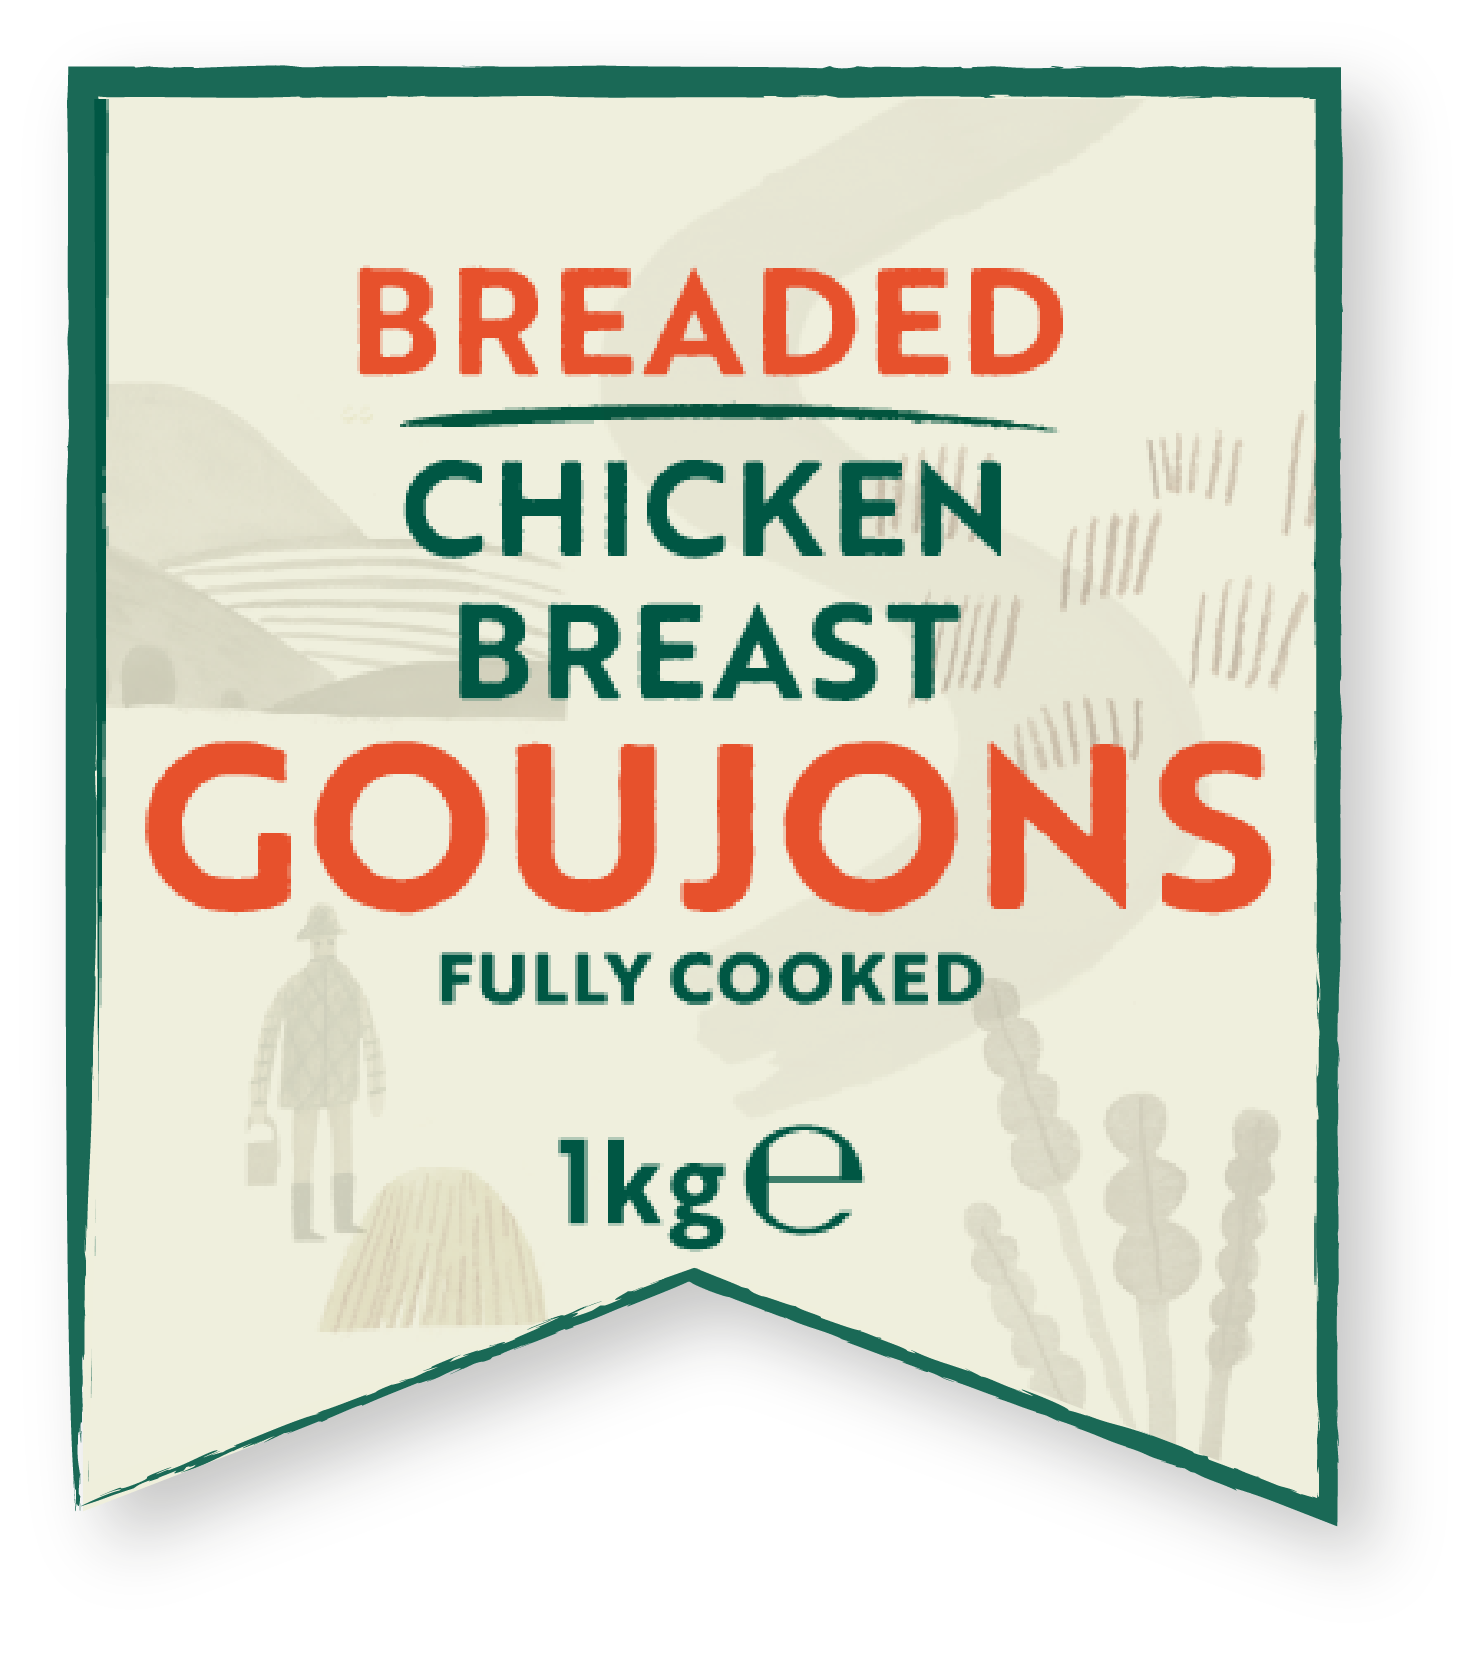 Breaded chicken breast goujons